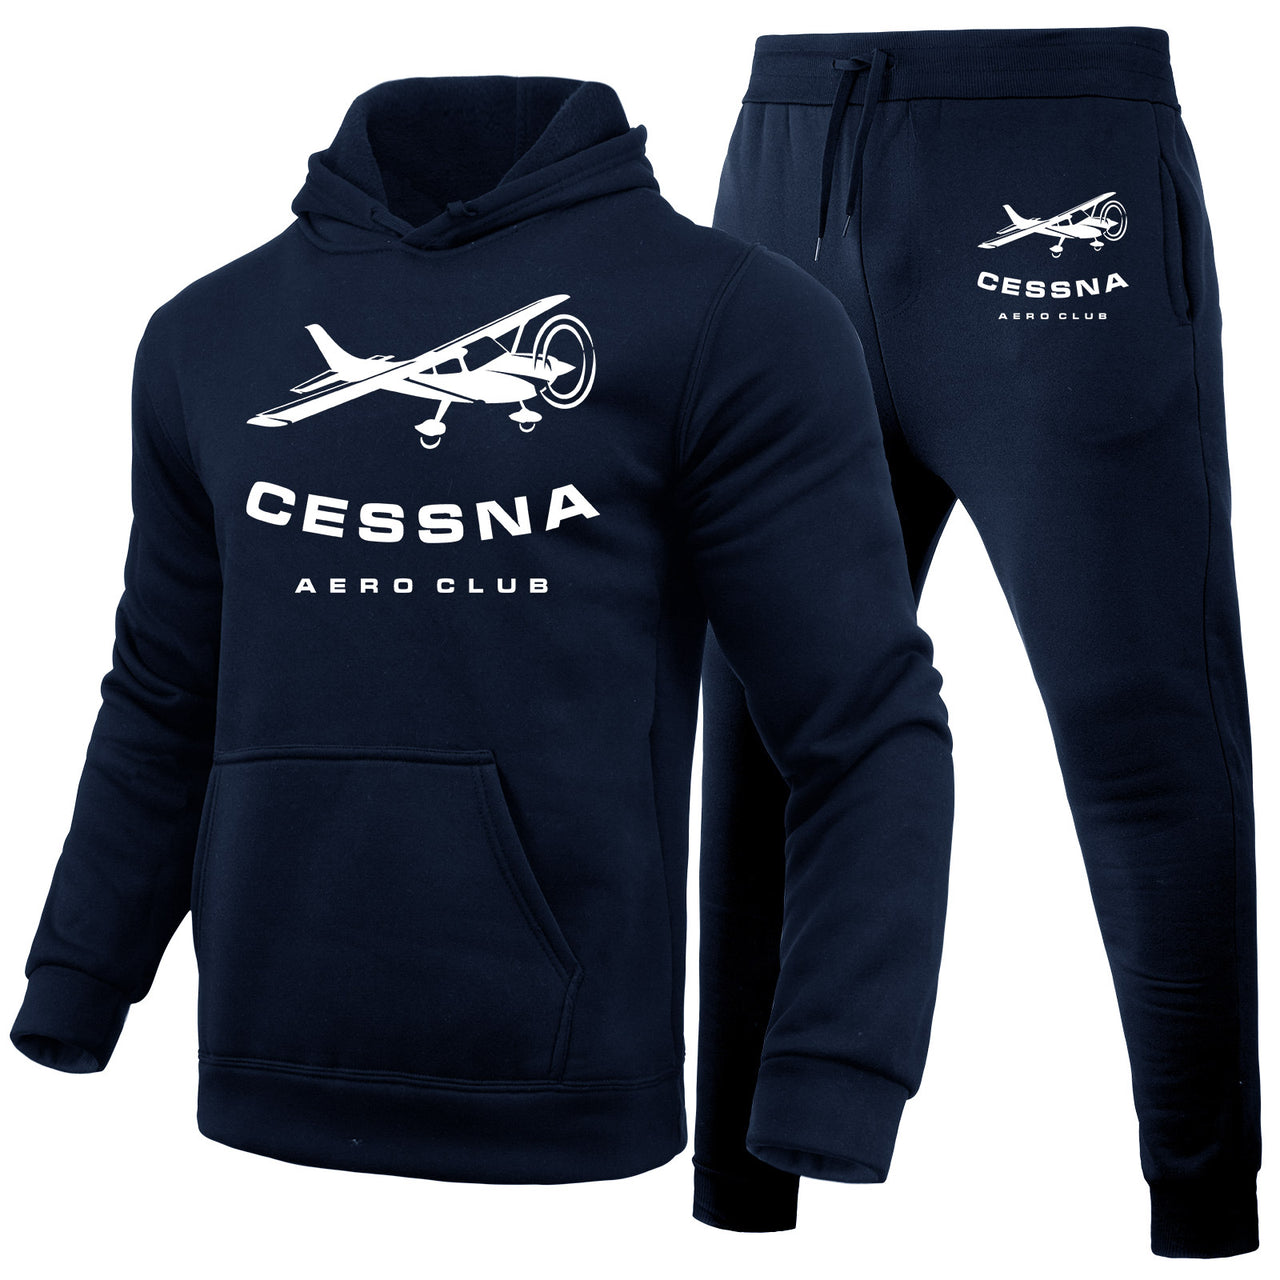 Cessna Aeroclub Designed Hoodies & Sweatpants Set